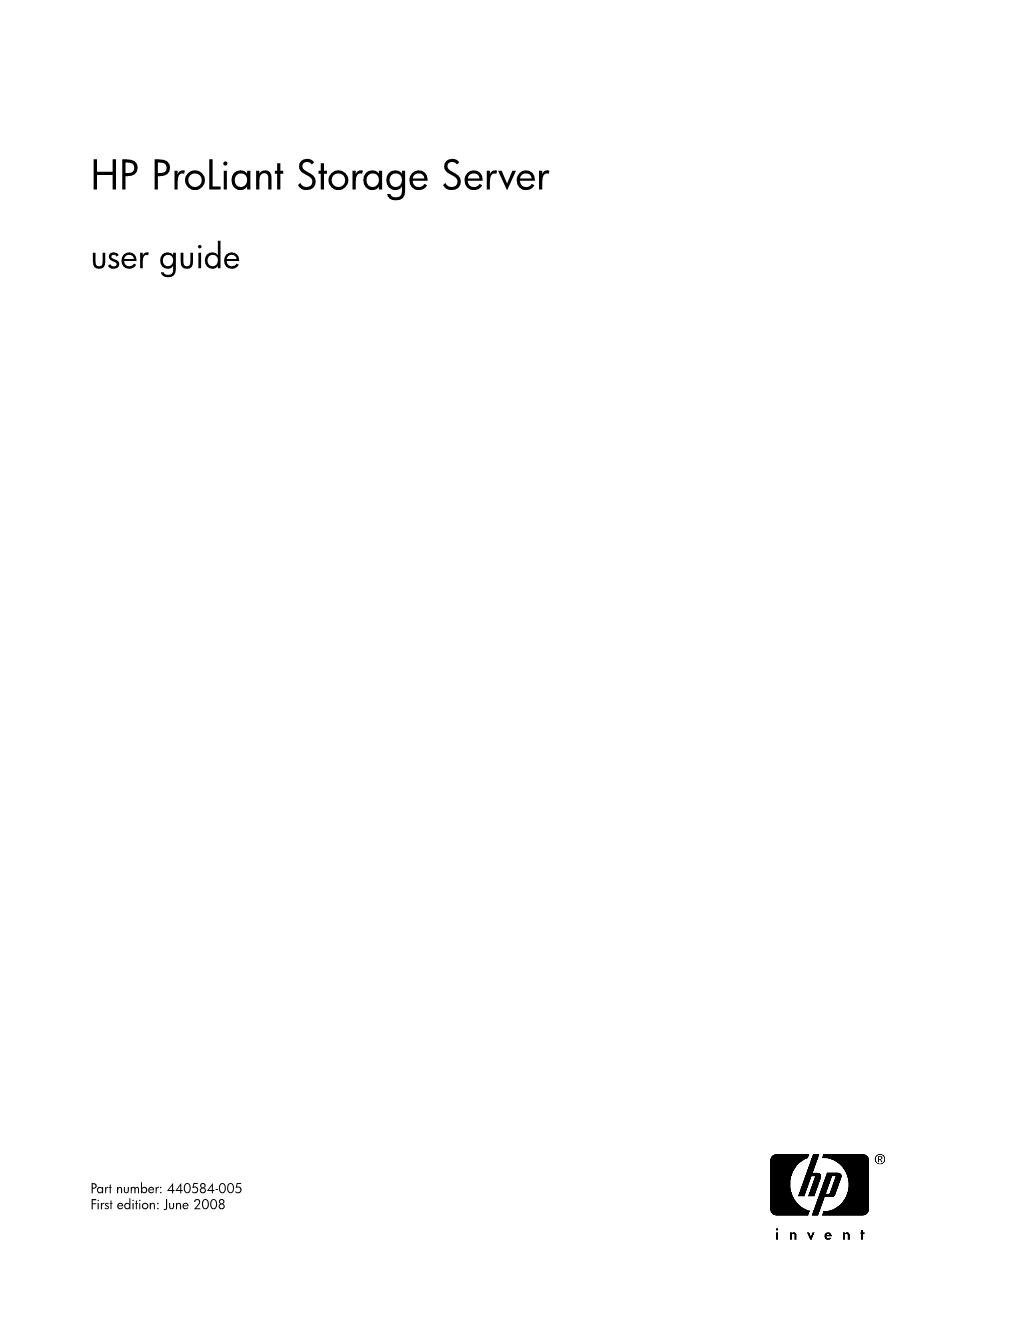 HP Proliant Storage Server User Guide